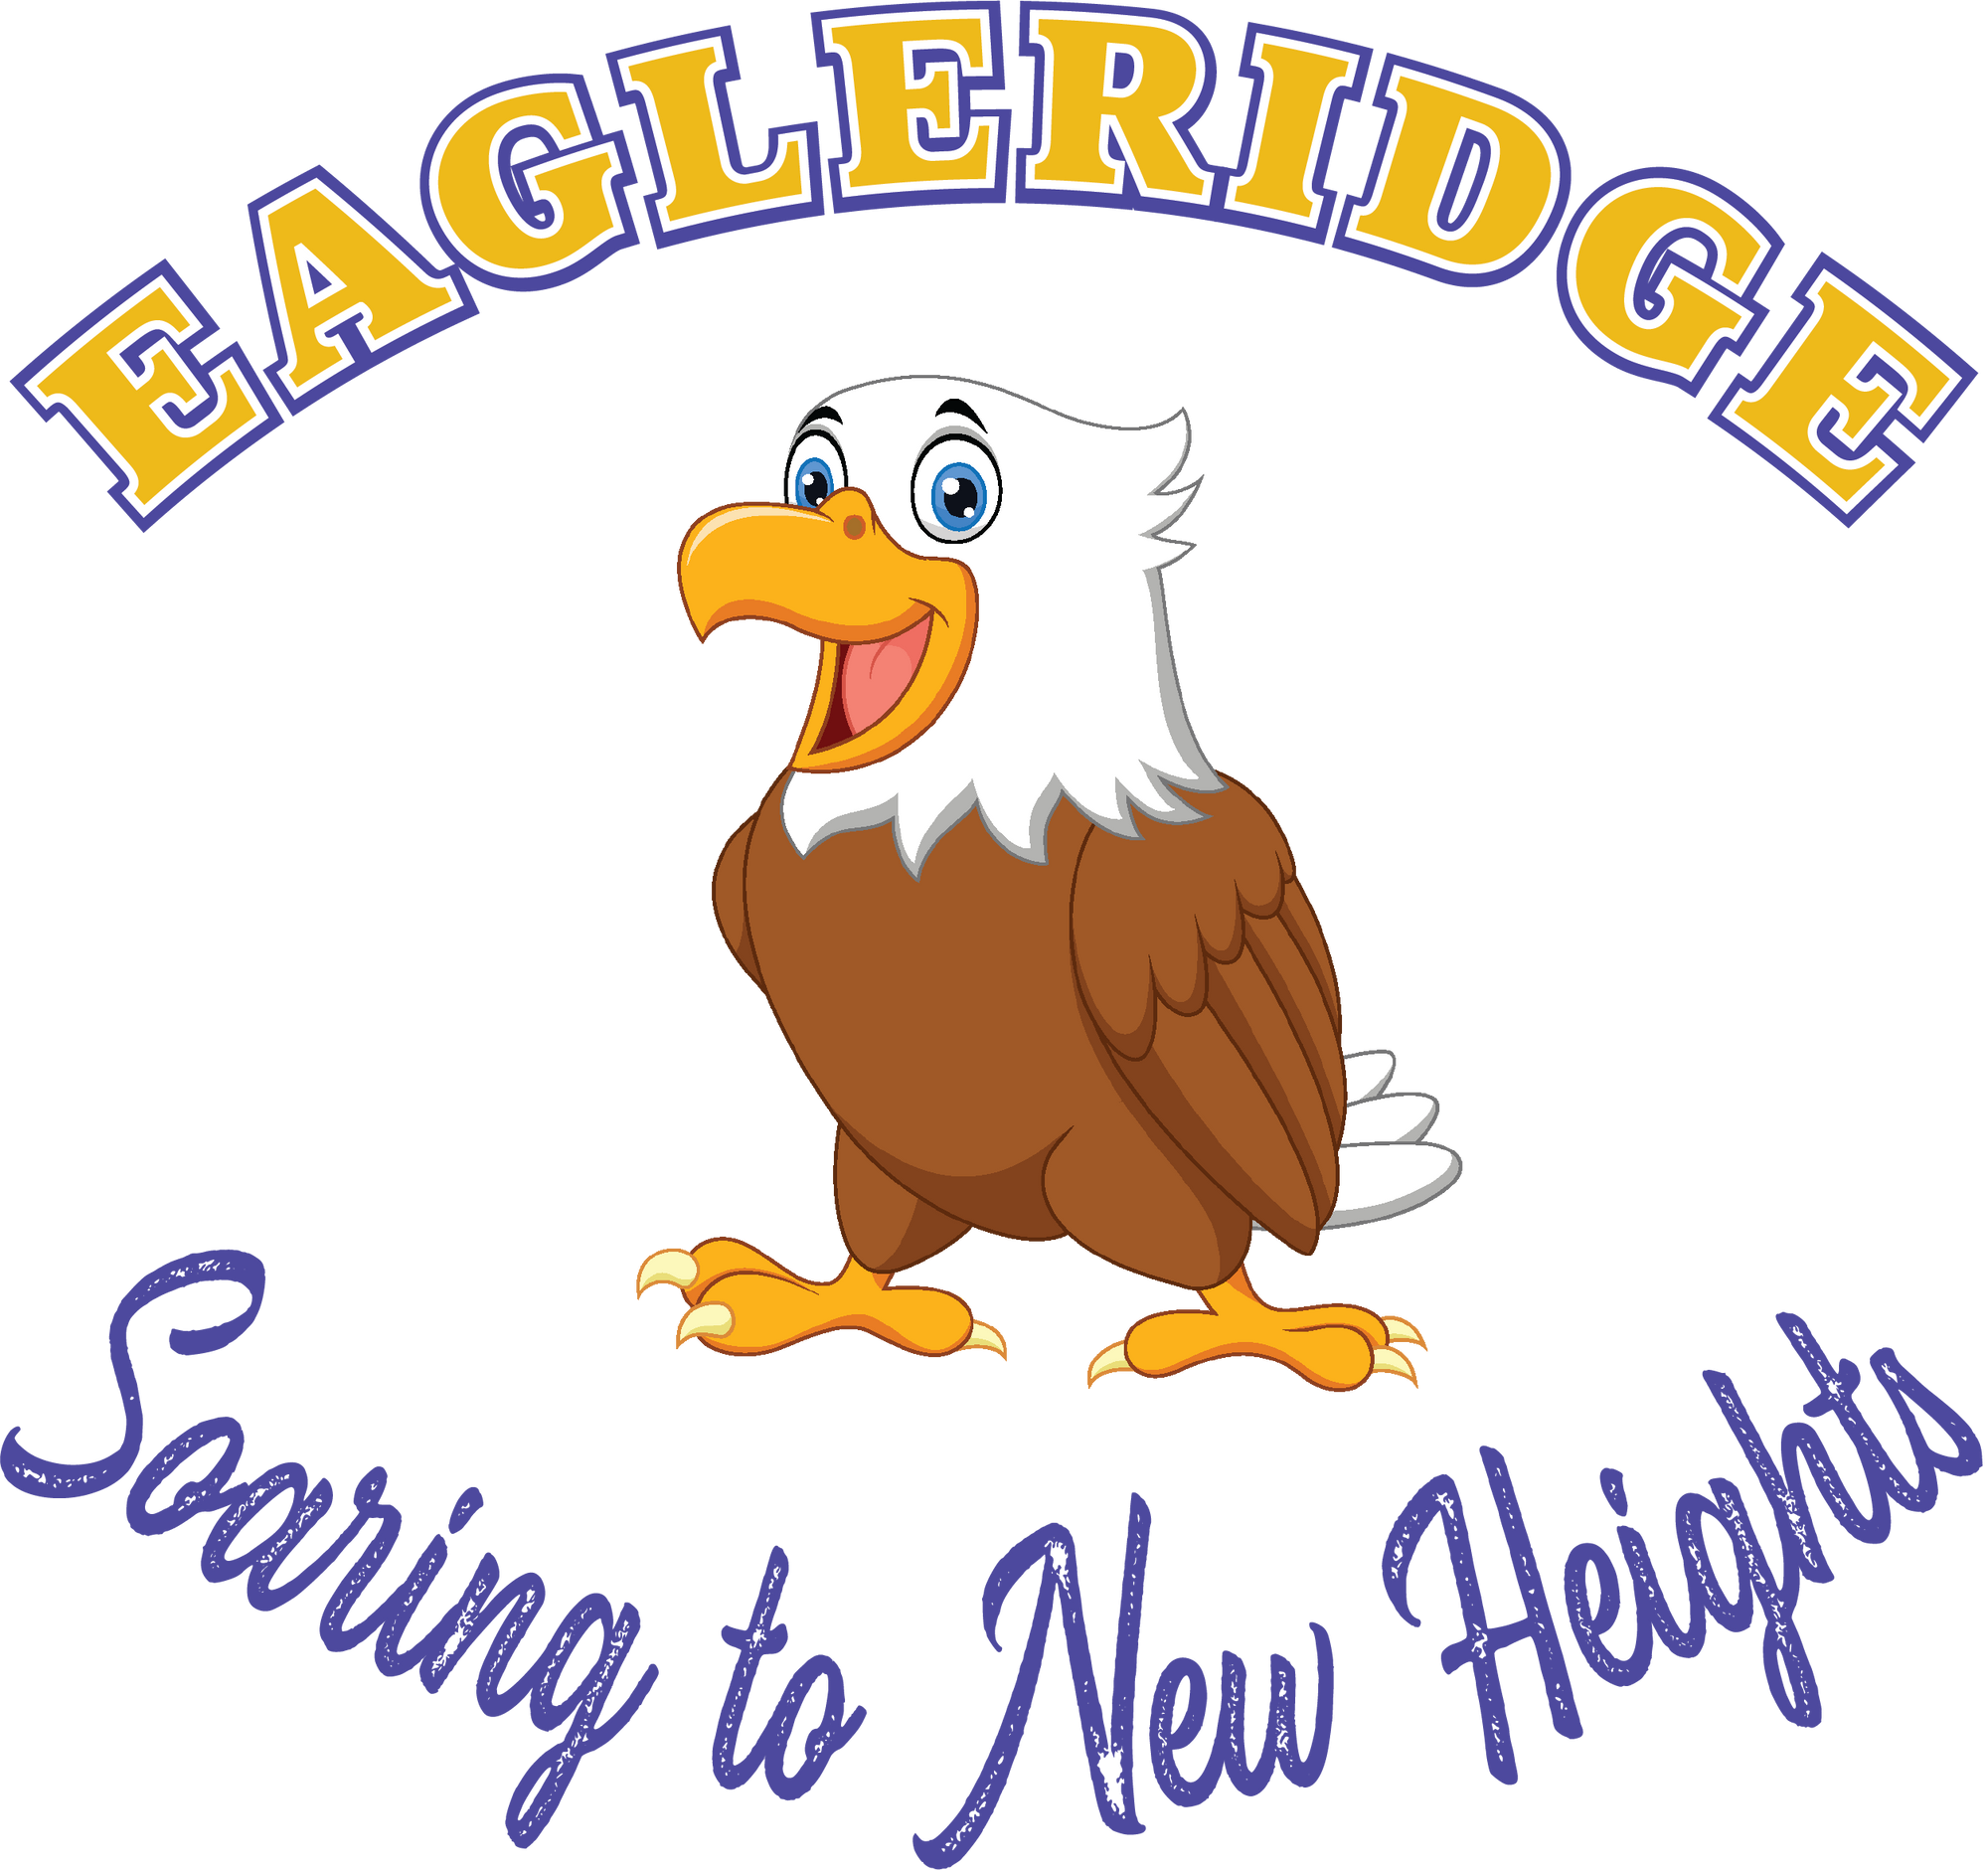 Eagleridge